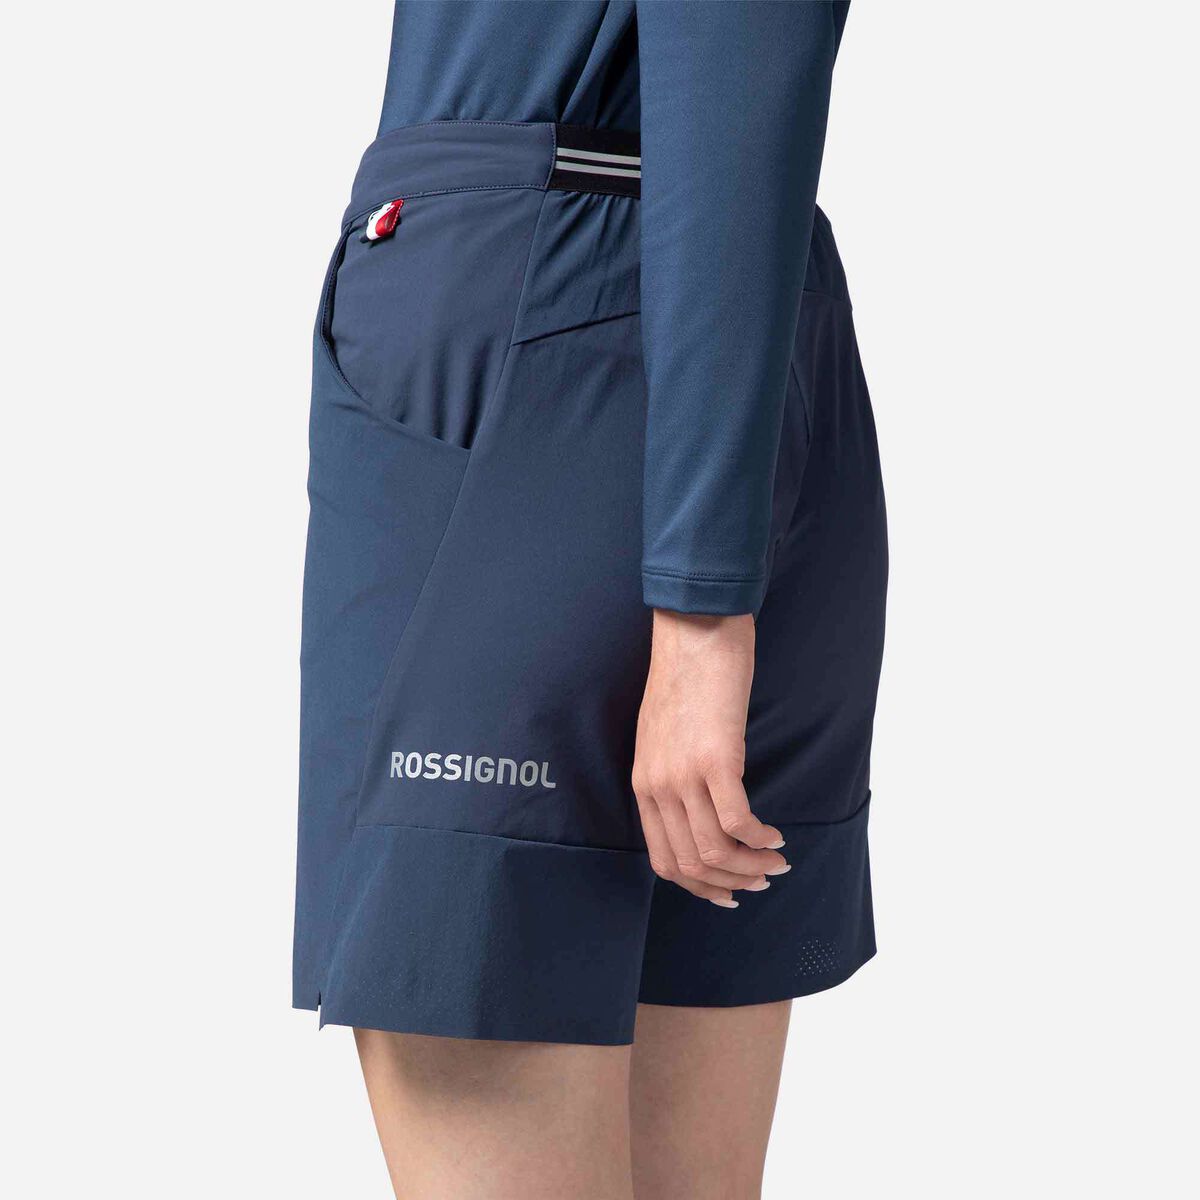 Rossignol Women's lightweight breathable shorts blue